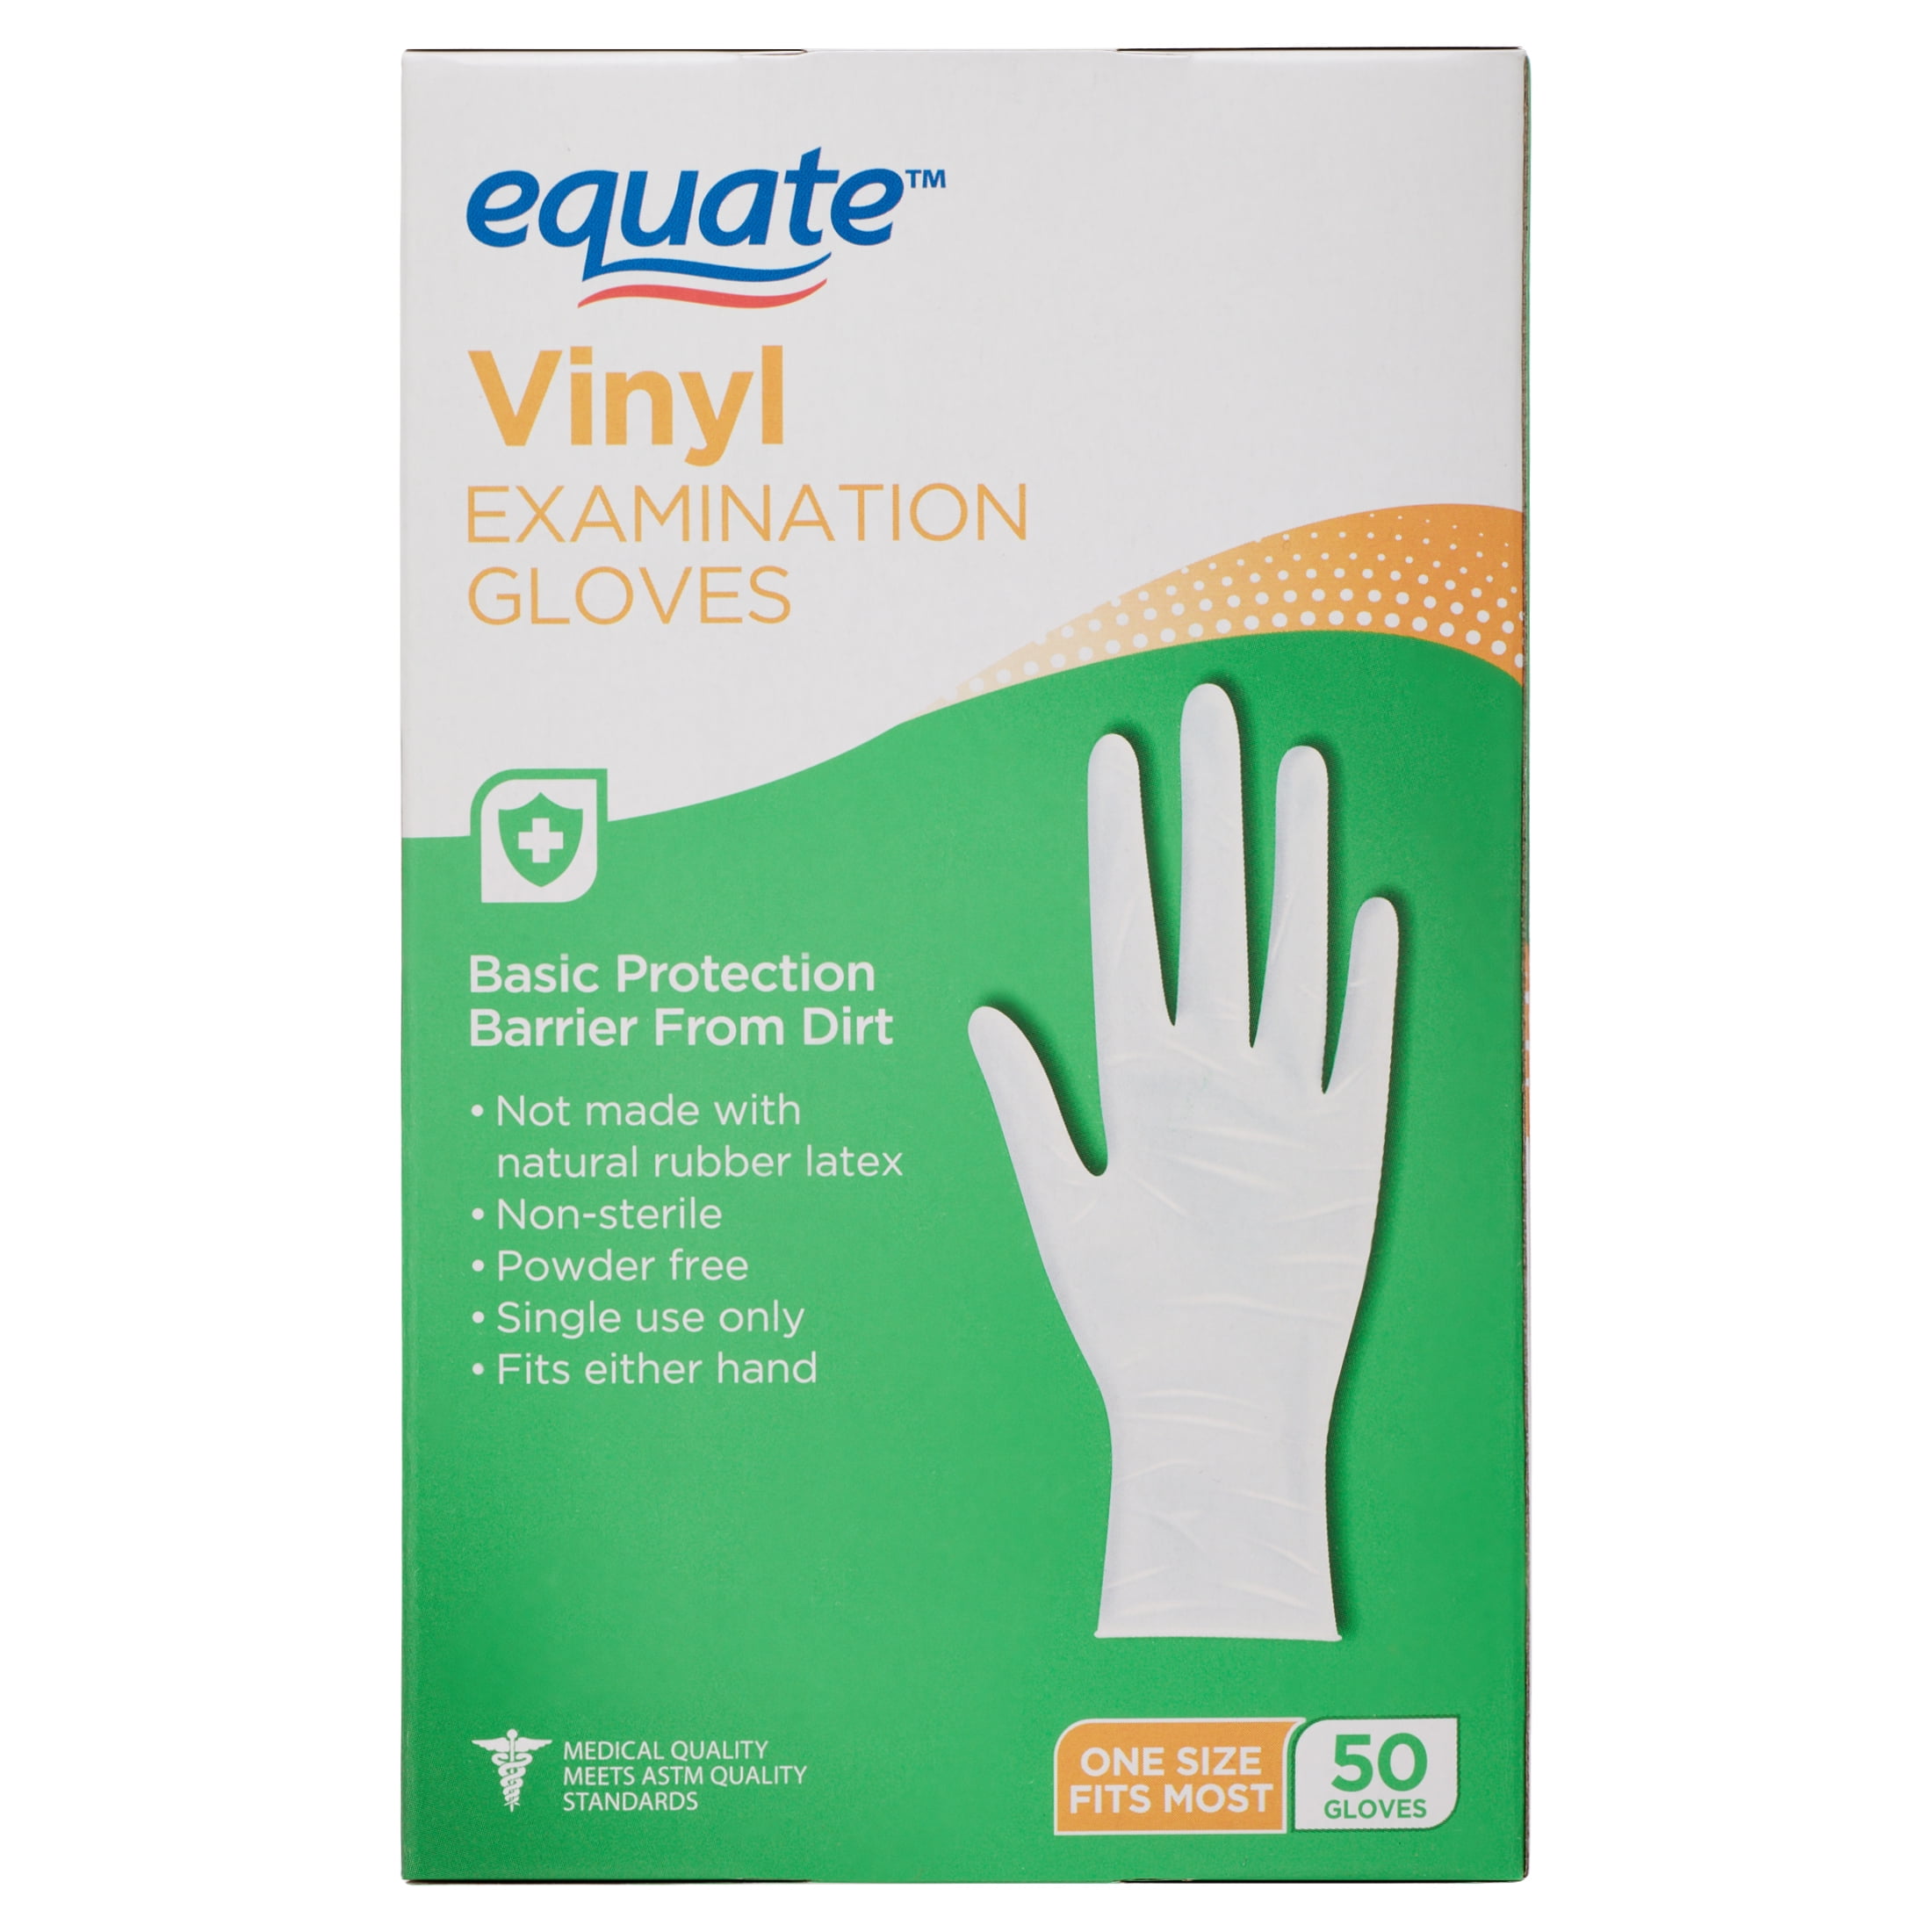 Equate Vinyl Examination Gloves, 50 Count